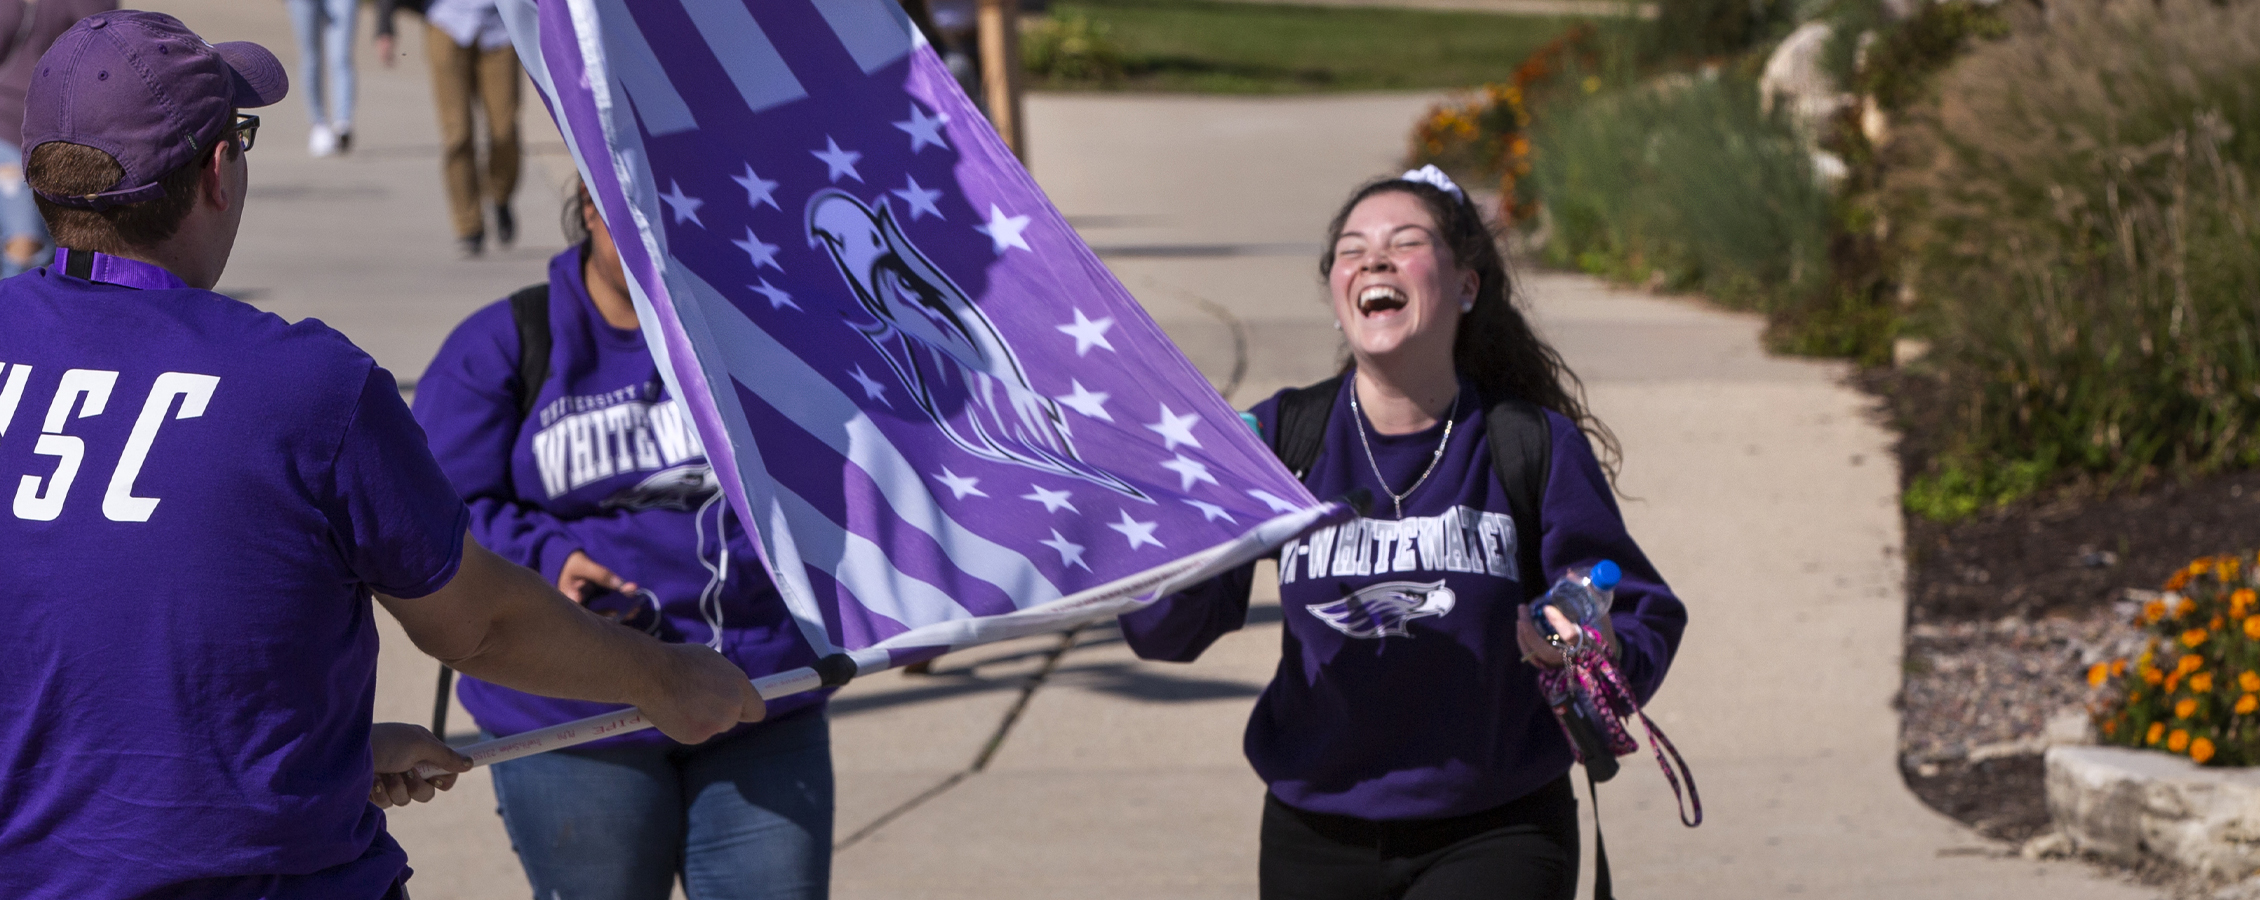 Three students laugh together, waving a purple Warhawk flag.